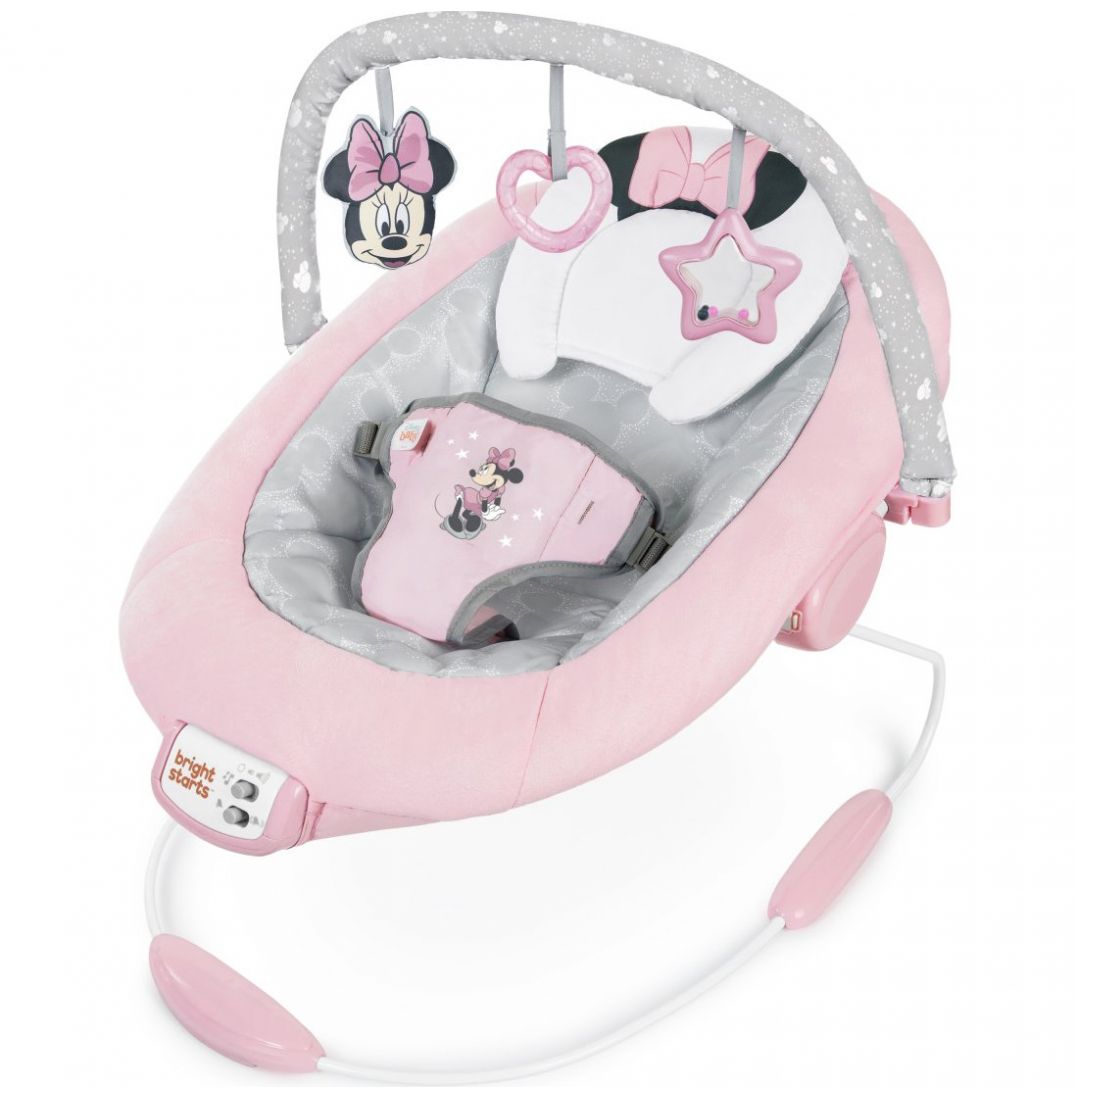 productos de Minnie Mouse cama infantil con toldo.